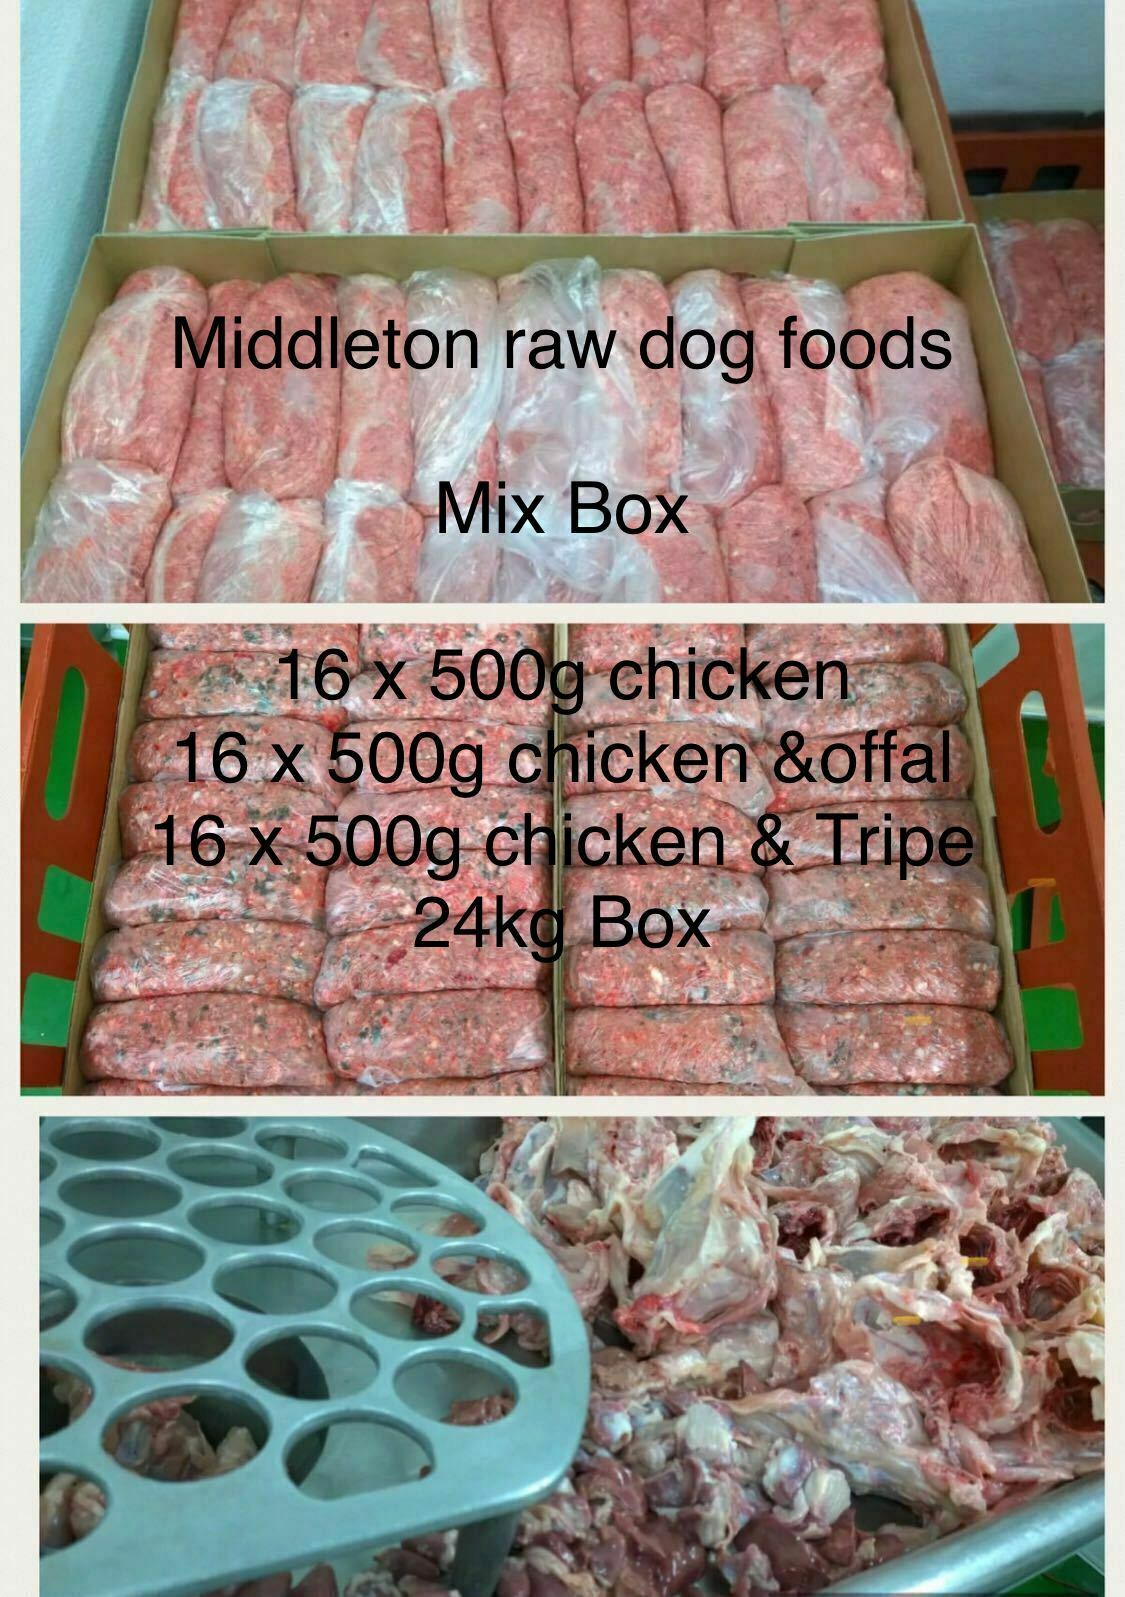 Mix Box Frozen Dog Food 48x 500g bags 24kg box Middleton